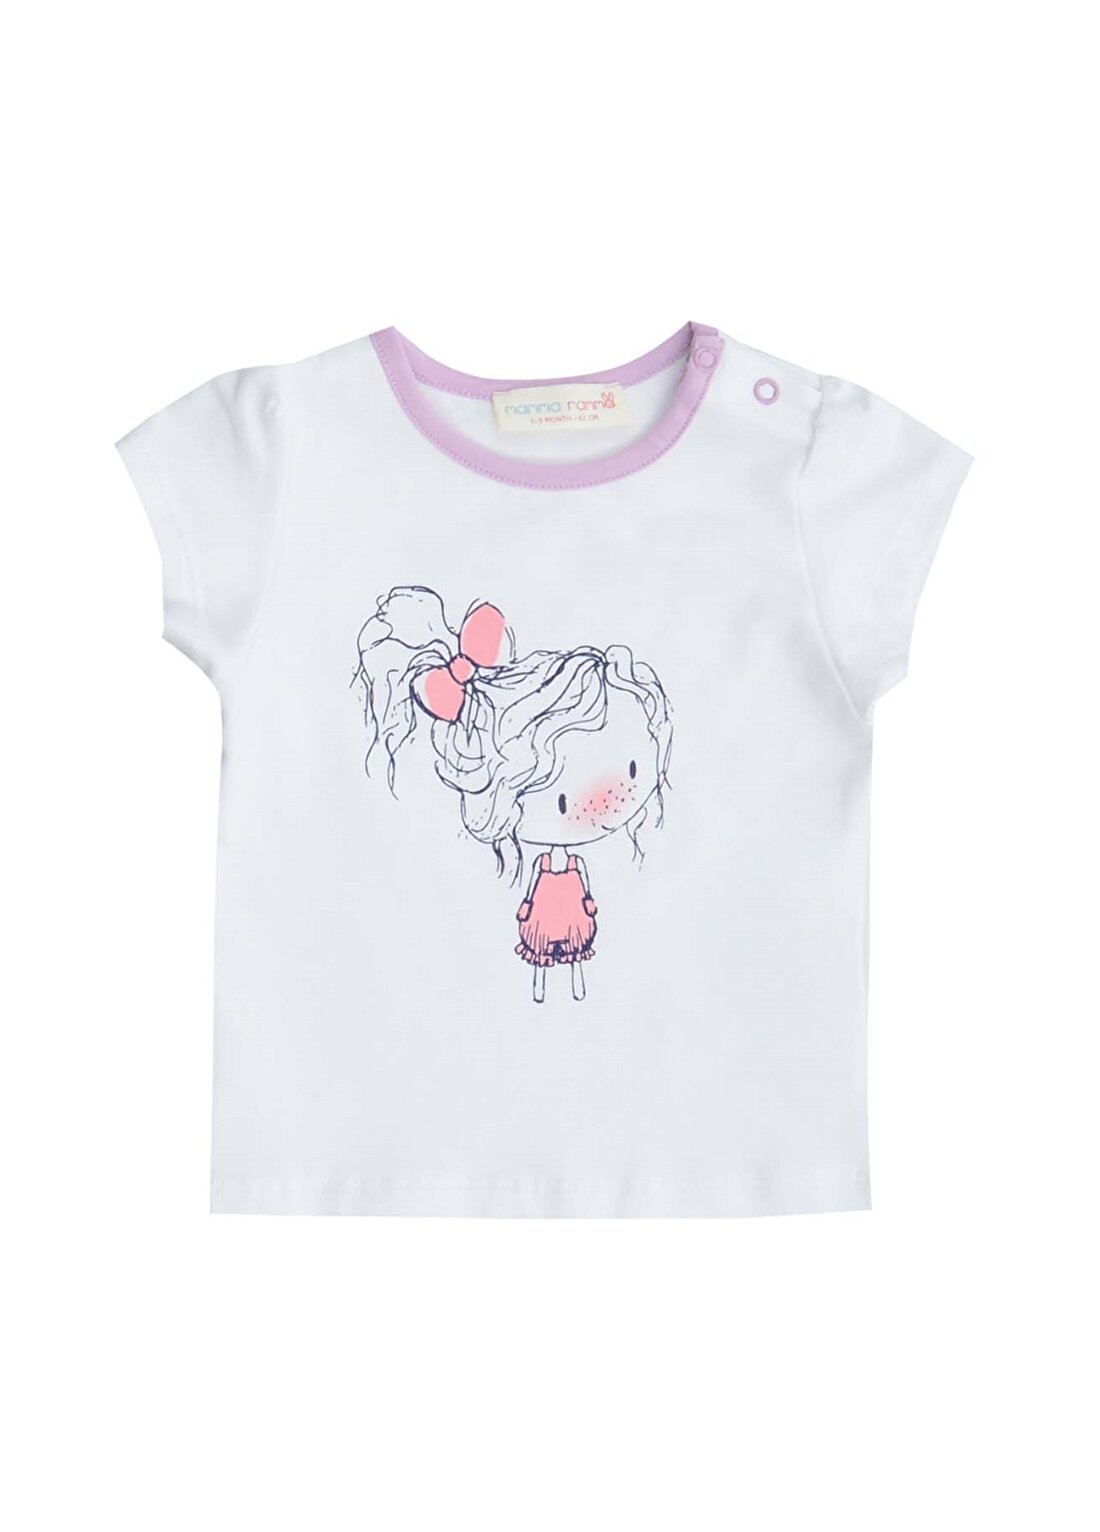 Mammaramma MMG001 Beyaz Baskılı Kız Bebek T-Shirt